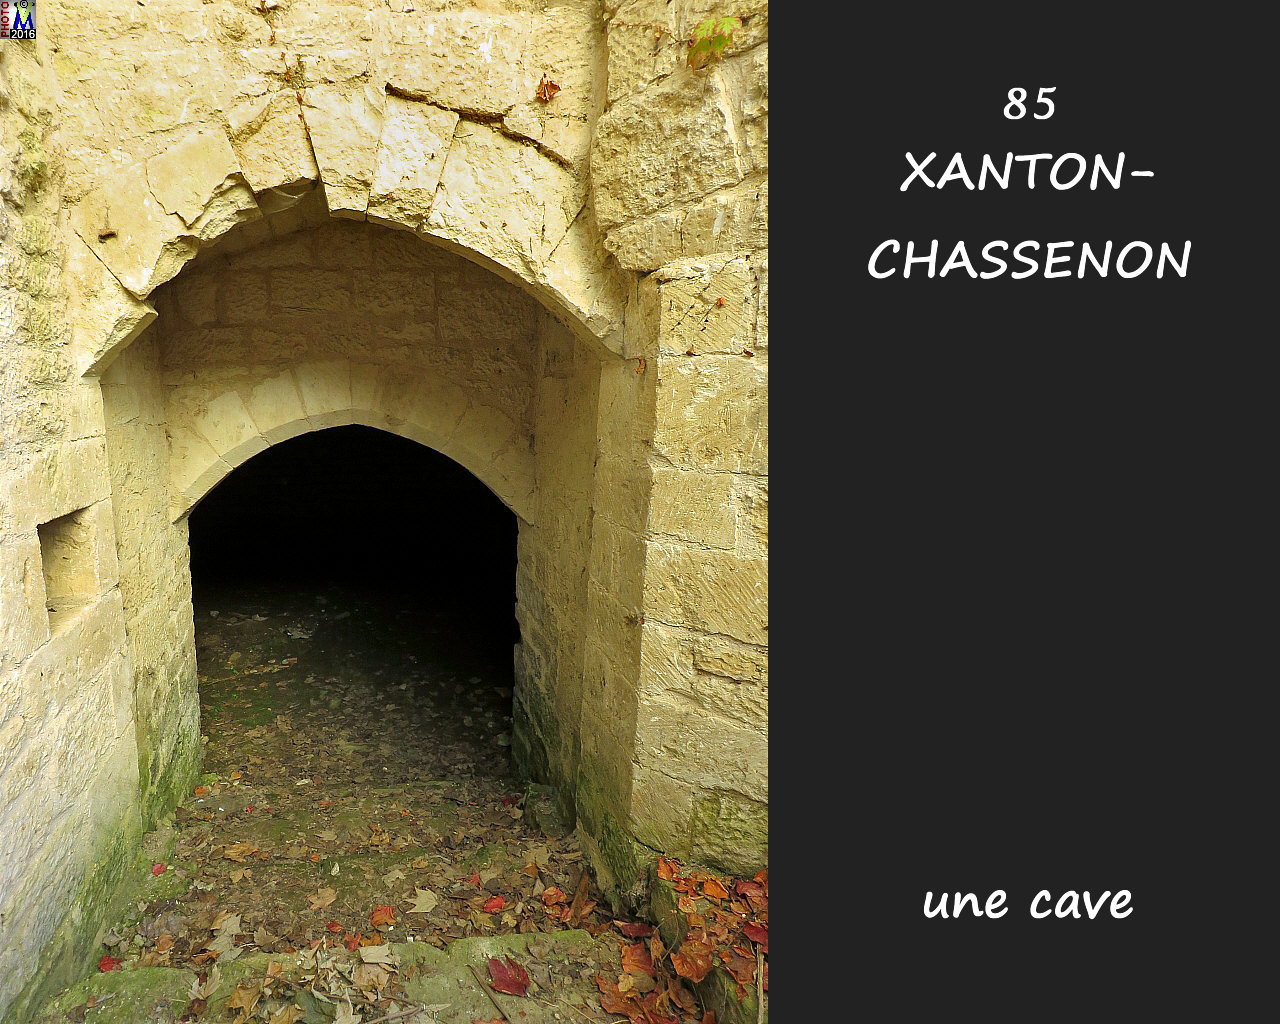 85XANTON-CHASSENON_cave_1002.jpg